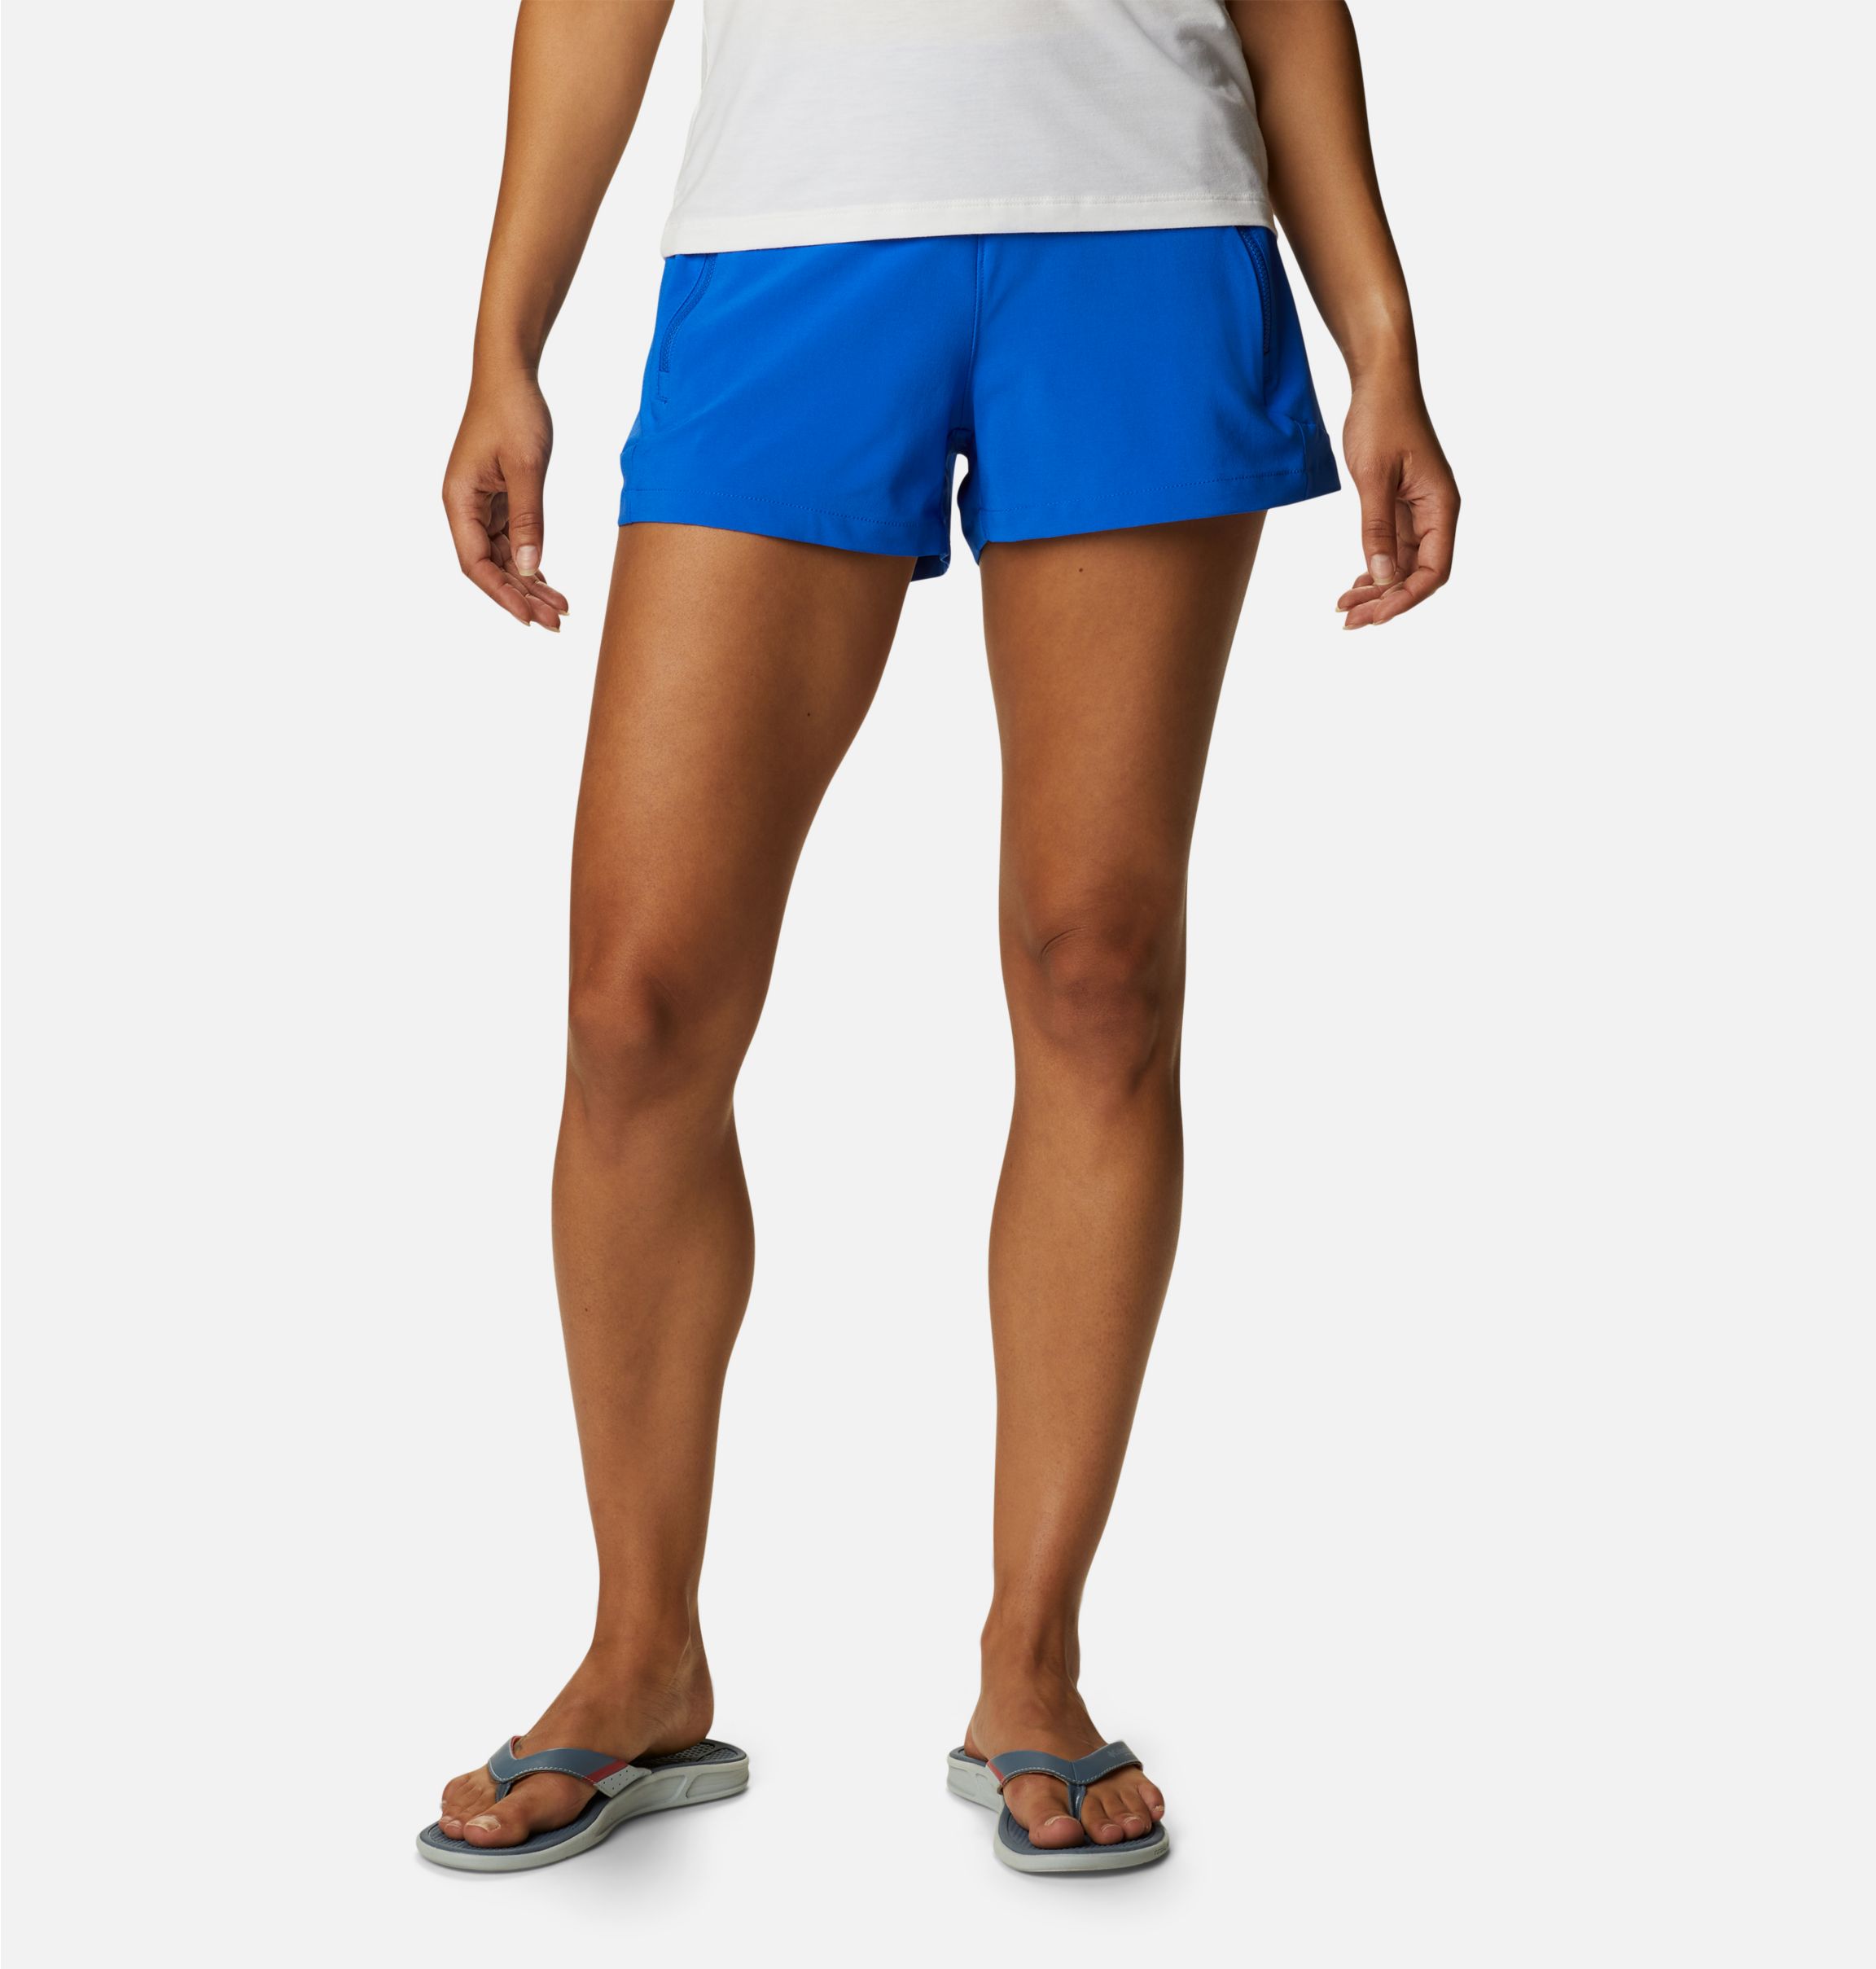 Columbia Women's PFG Tidal II Shorts - M - Grey